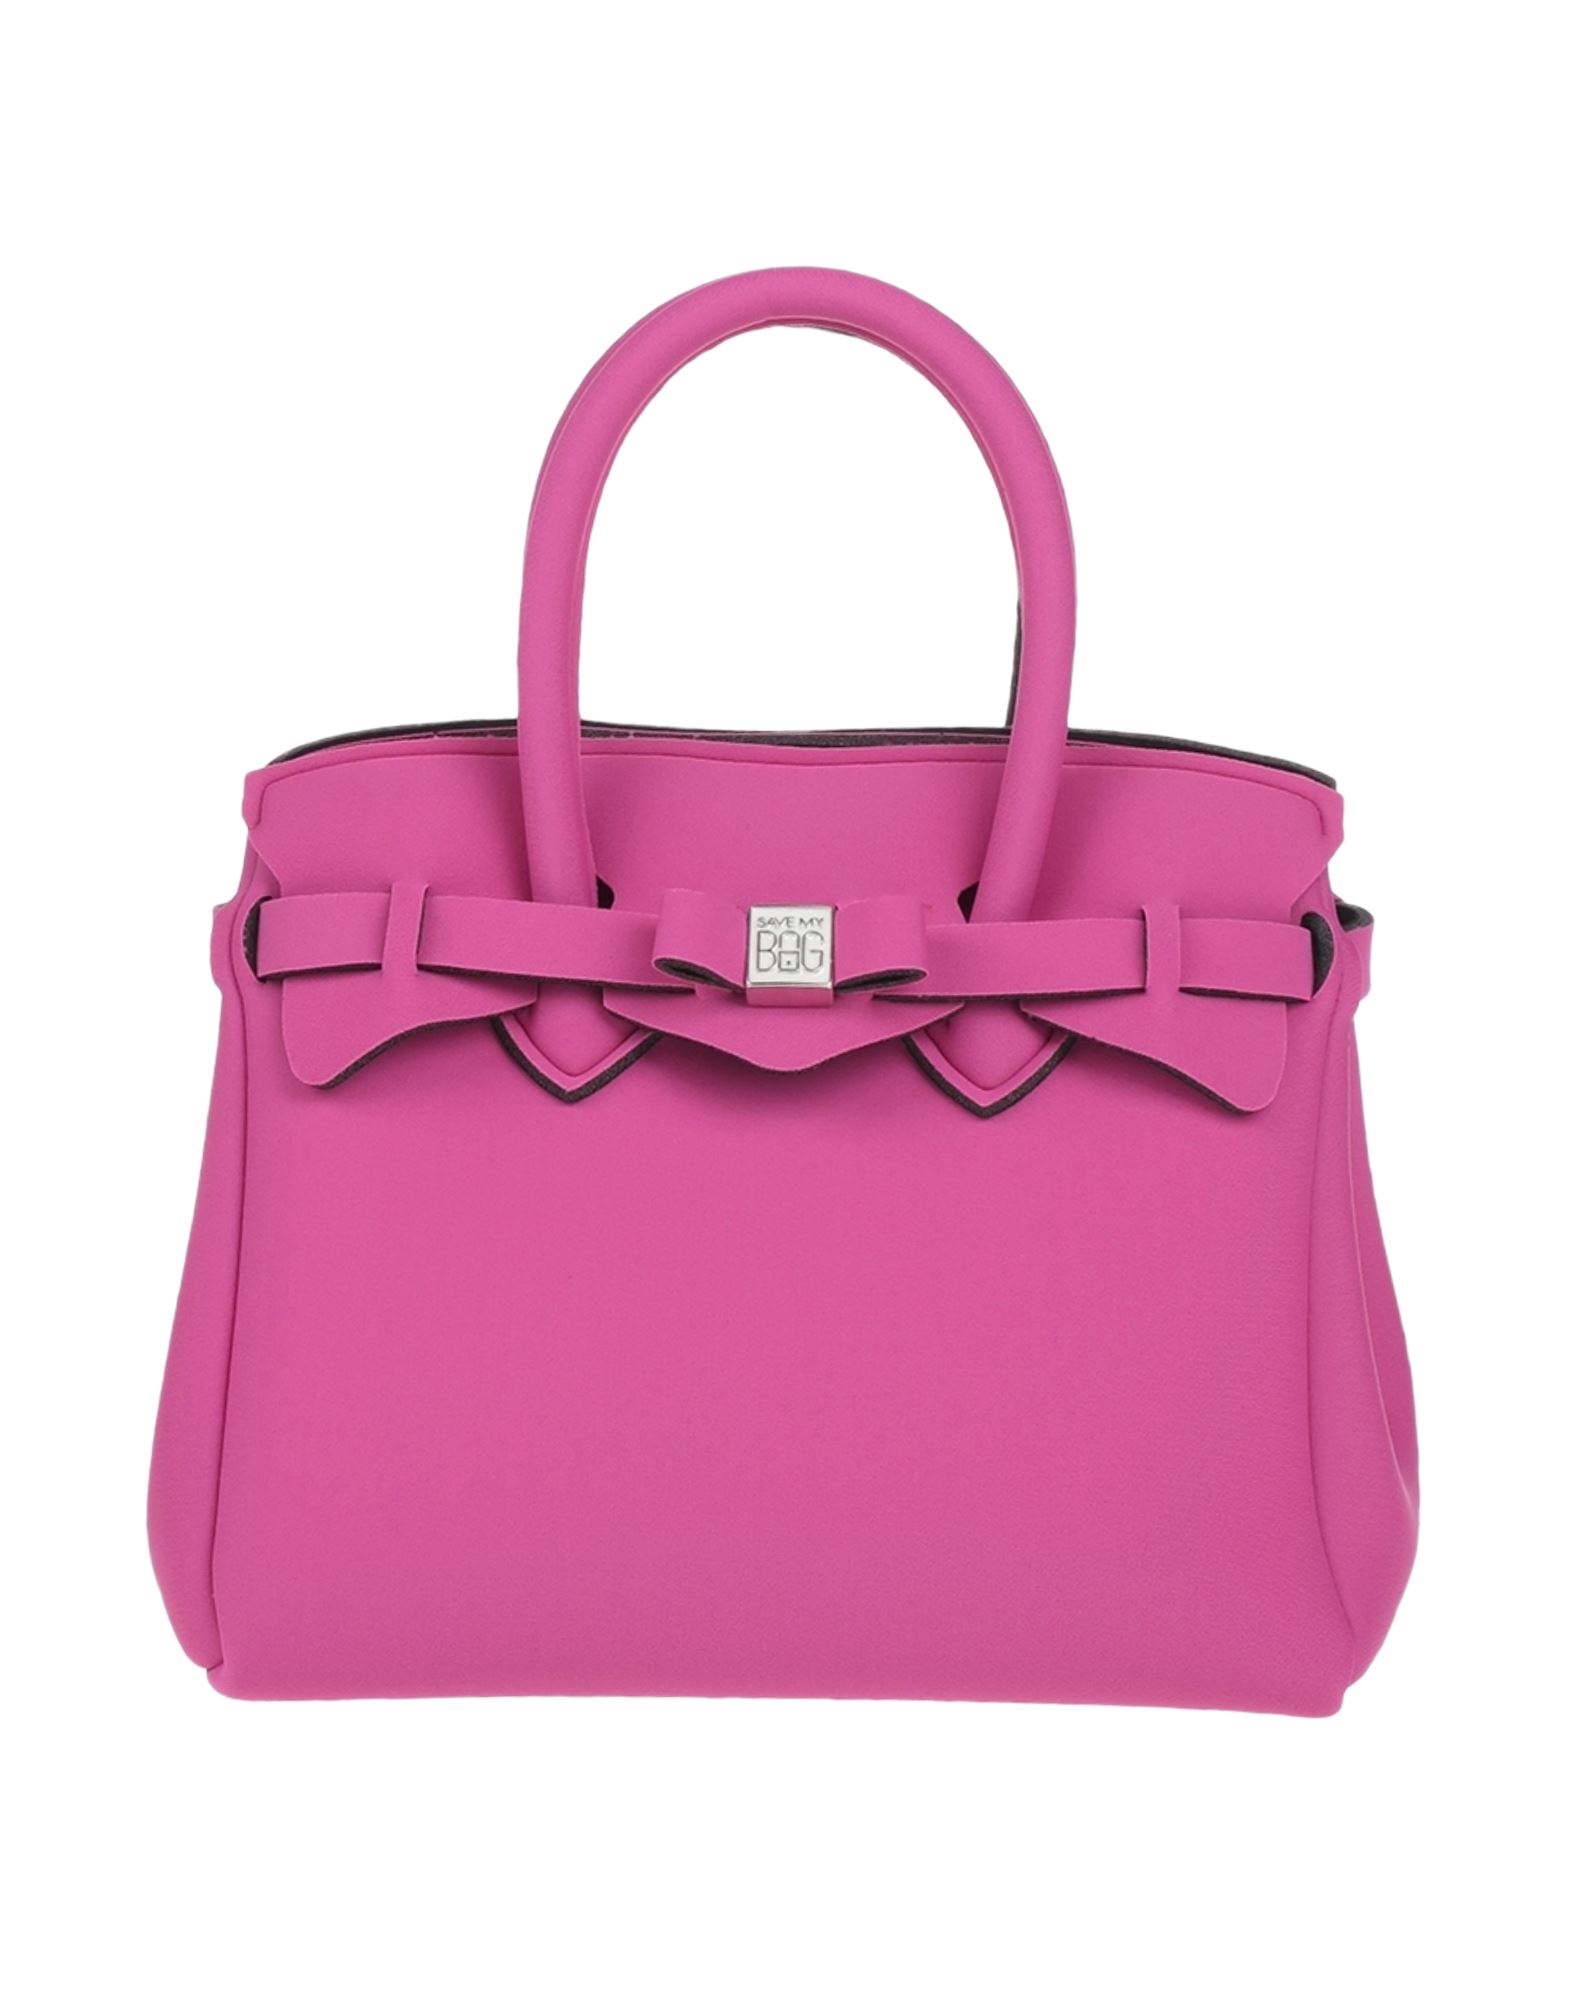 Save My Bag Handbags In Fuchsia